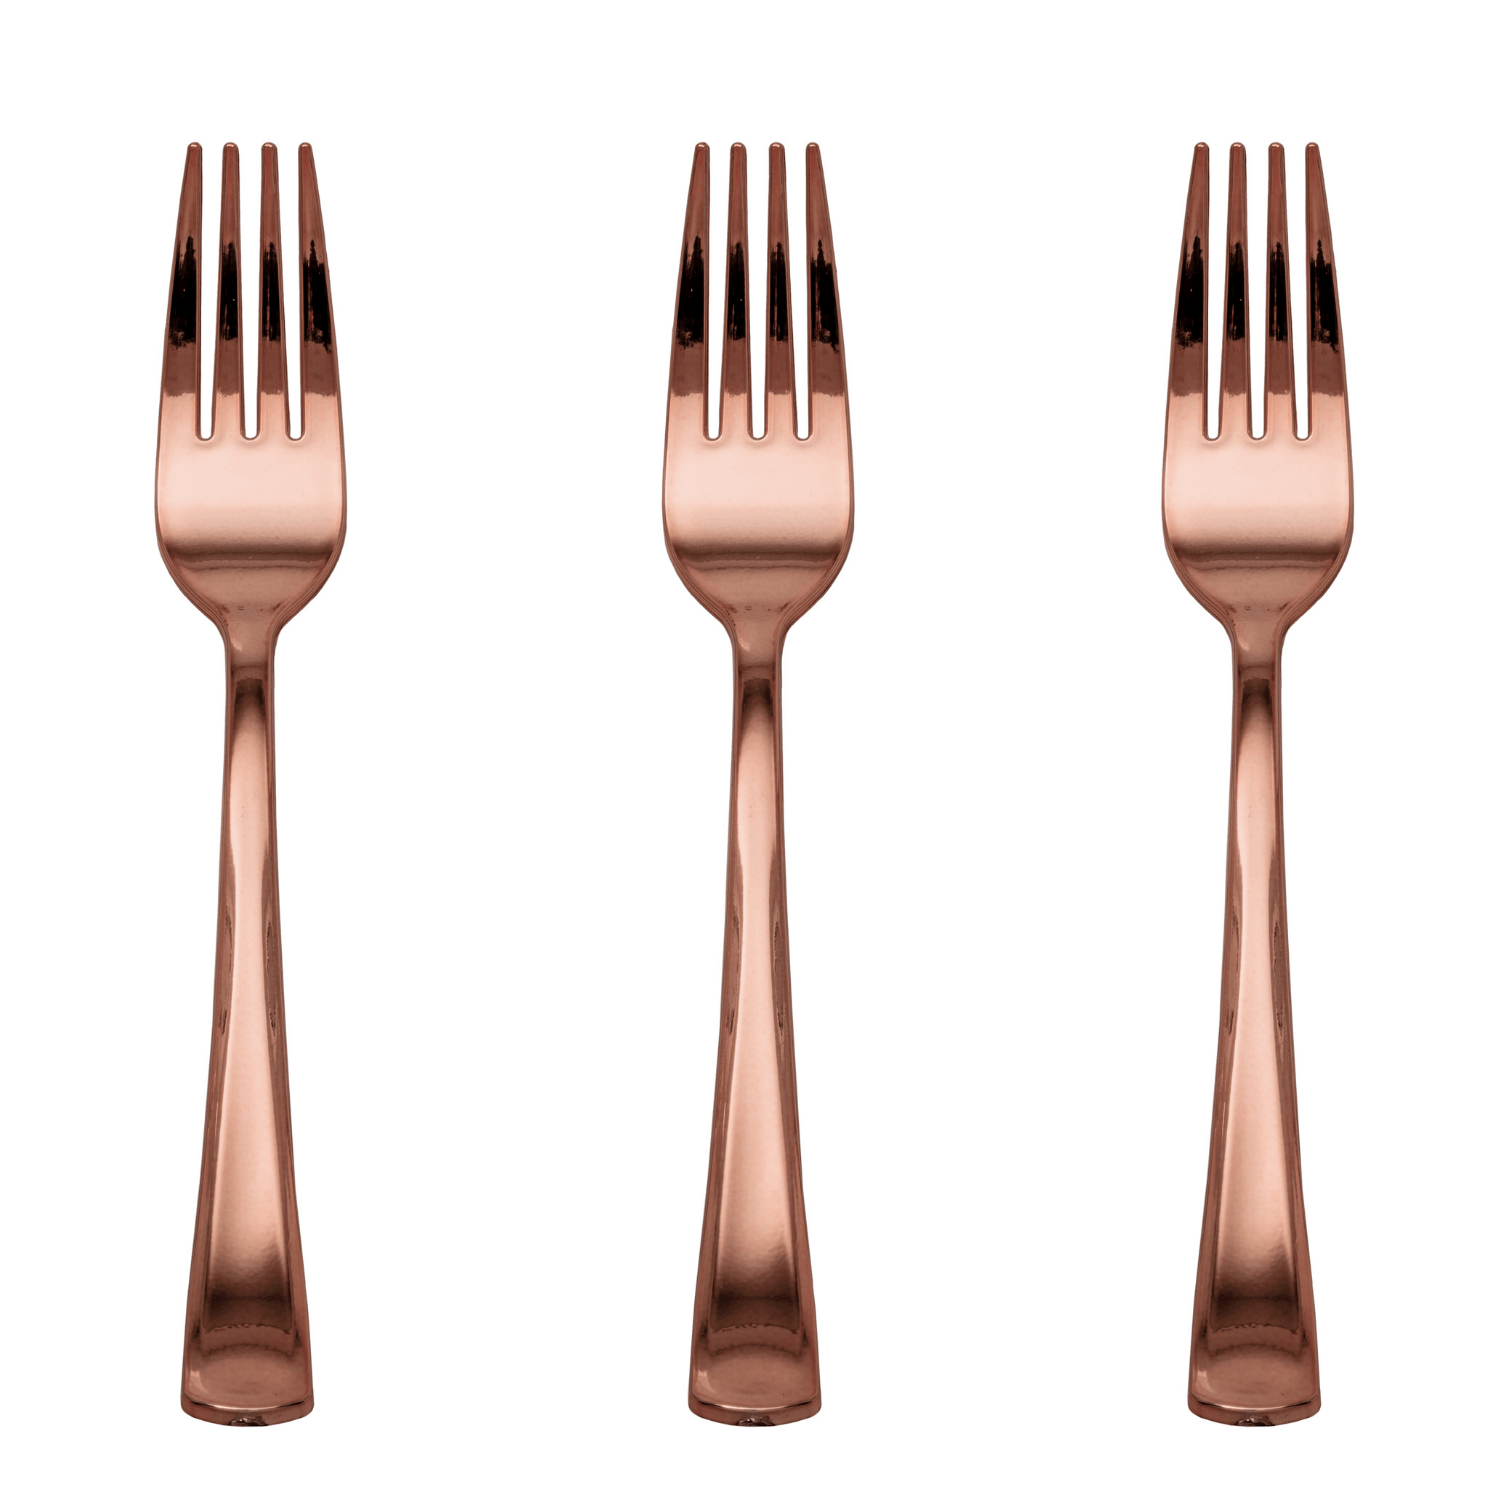 Exquisite Rose Gold Plastic Forks | 480 Count